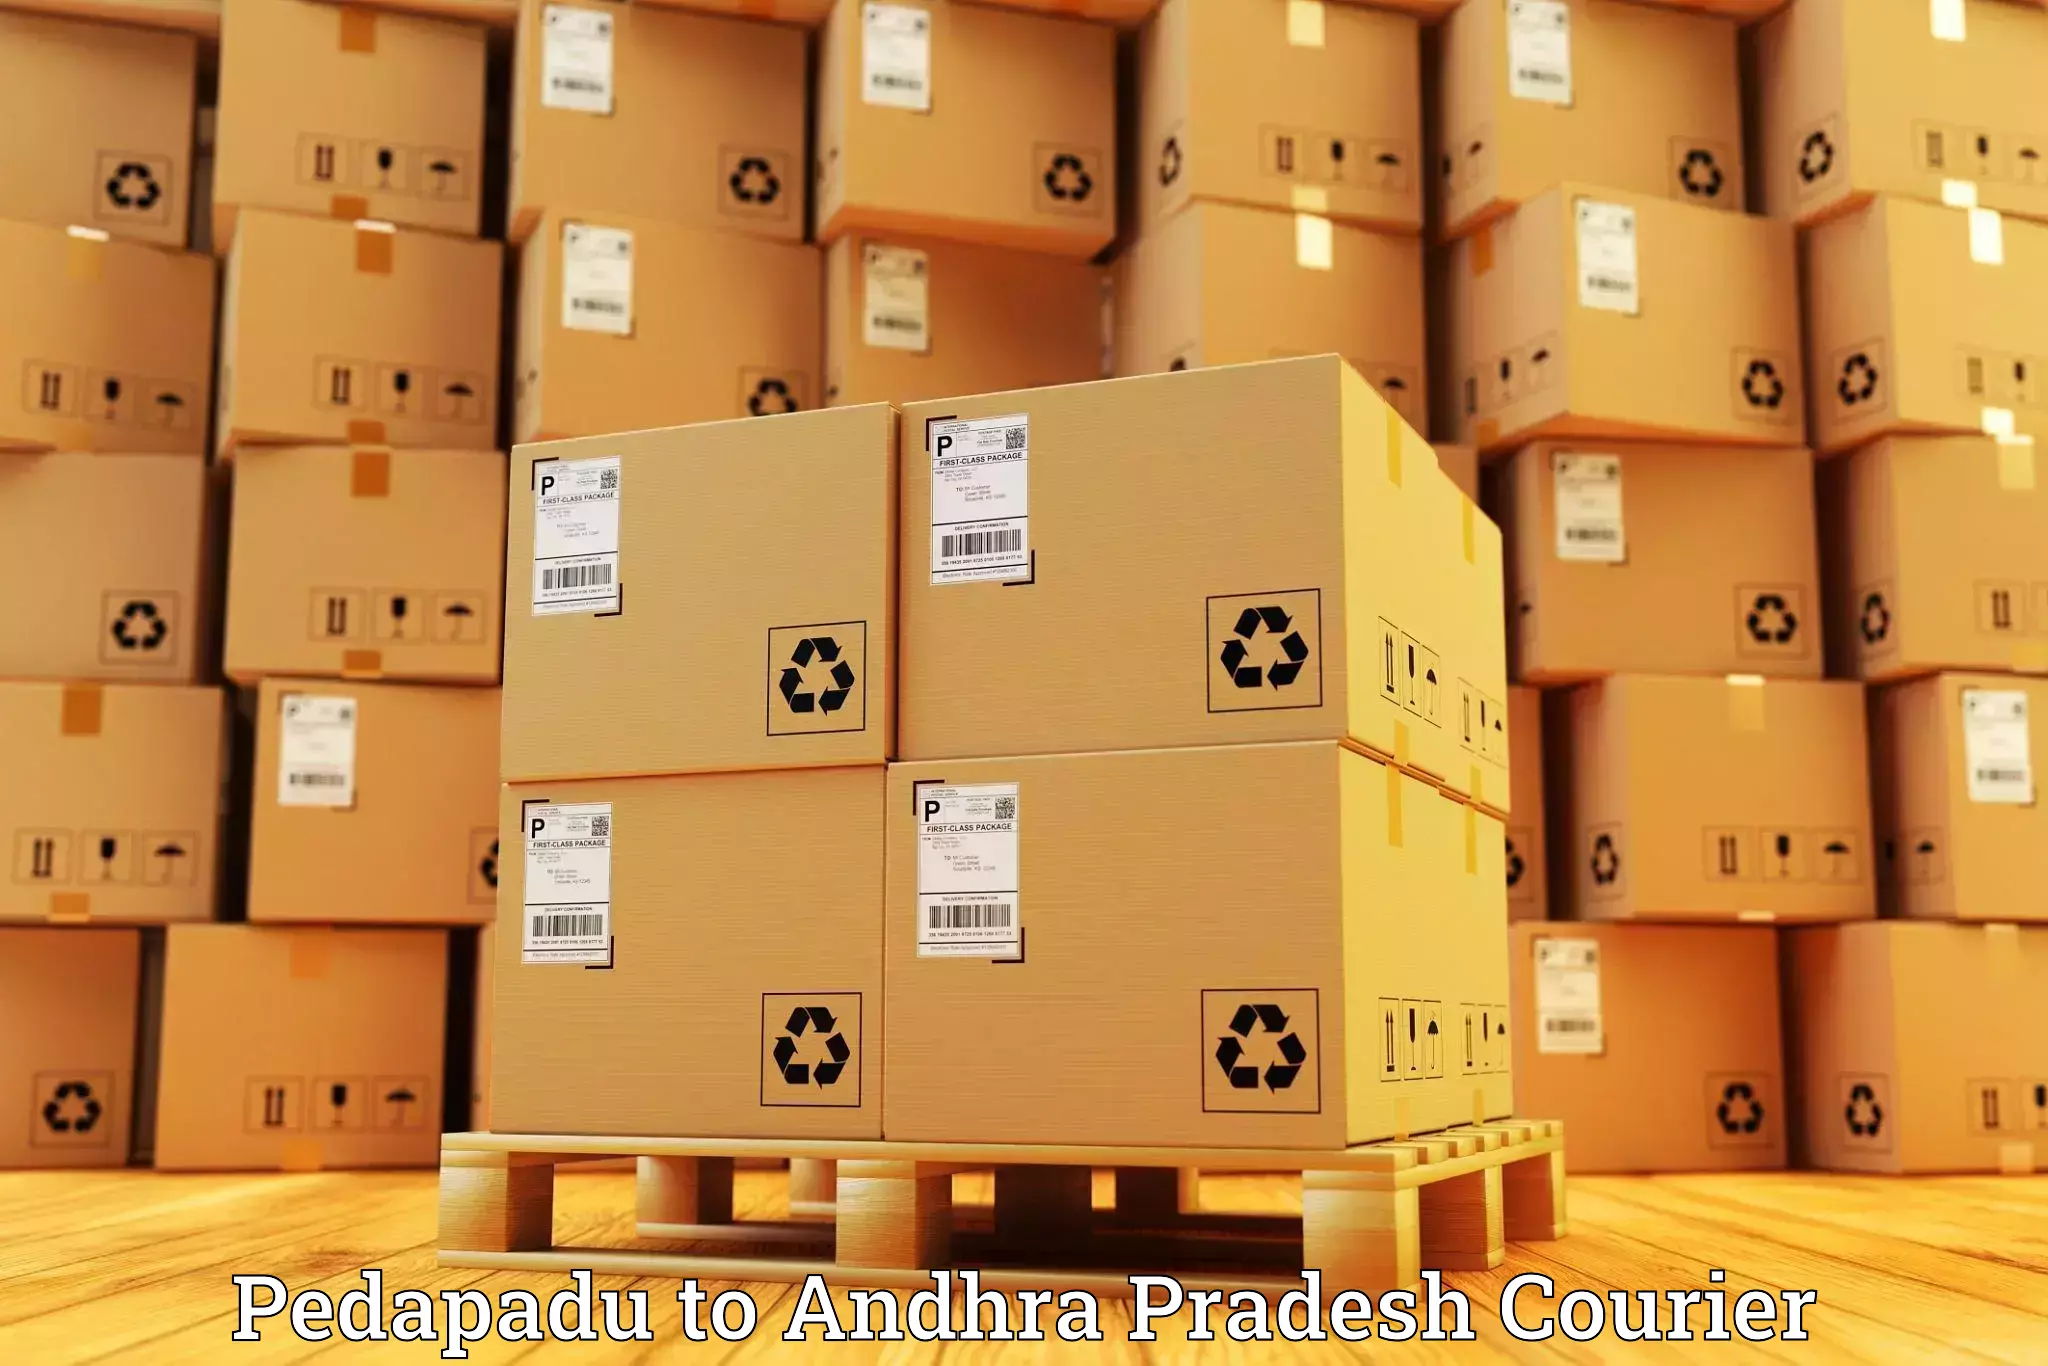 Flexible delivery schedules Pedapadu to Pamarru